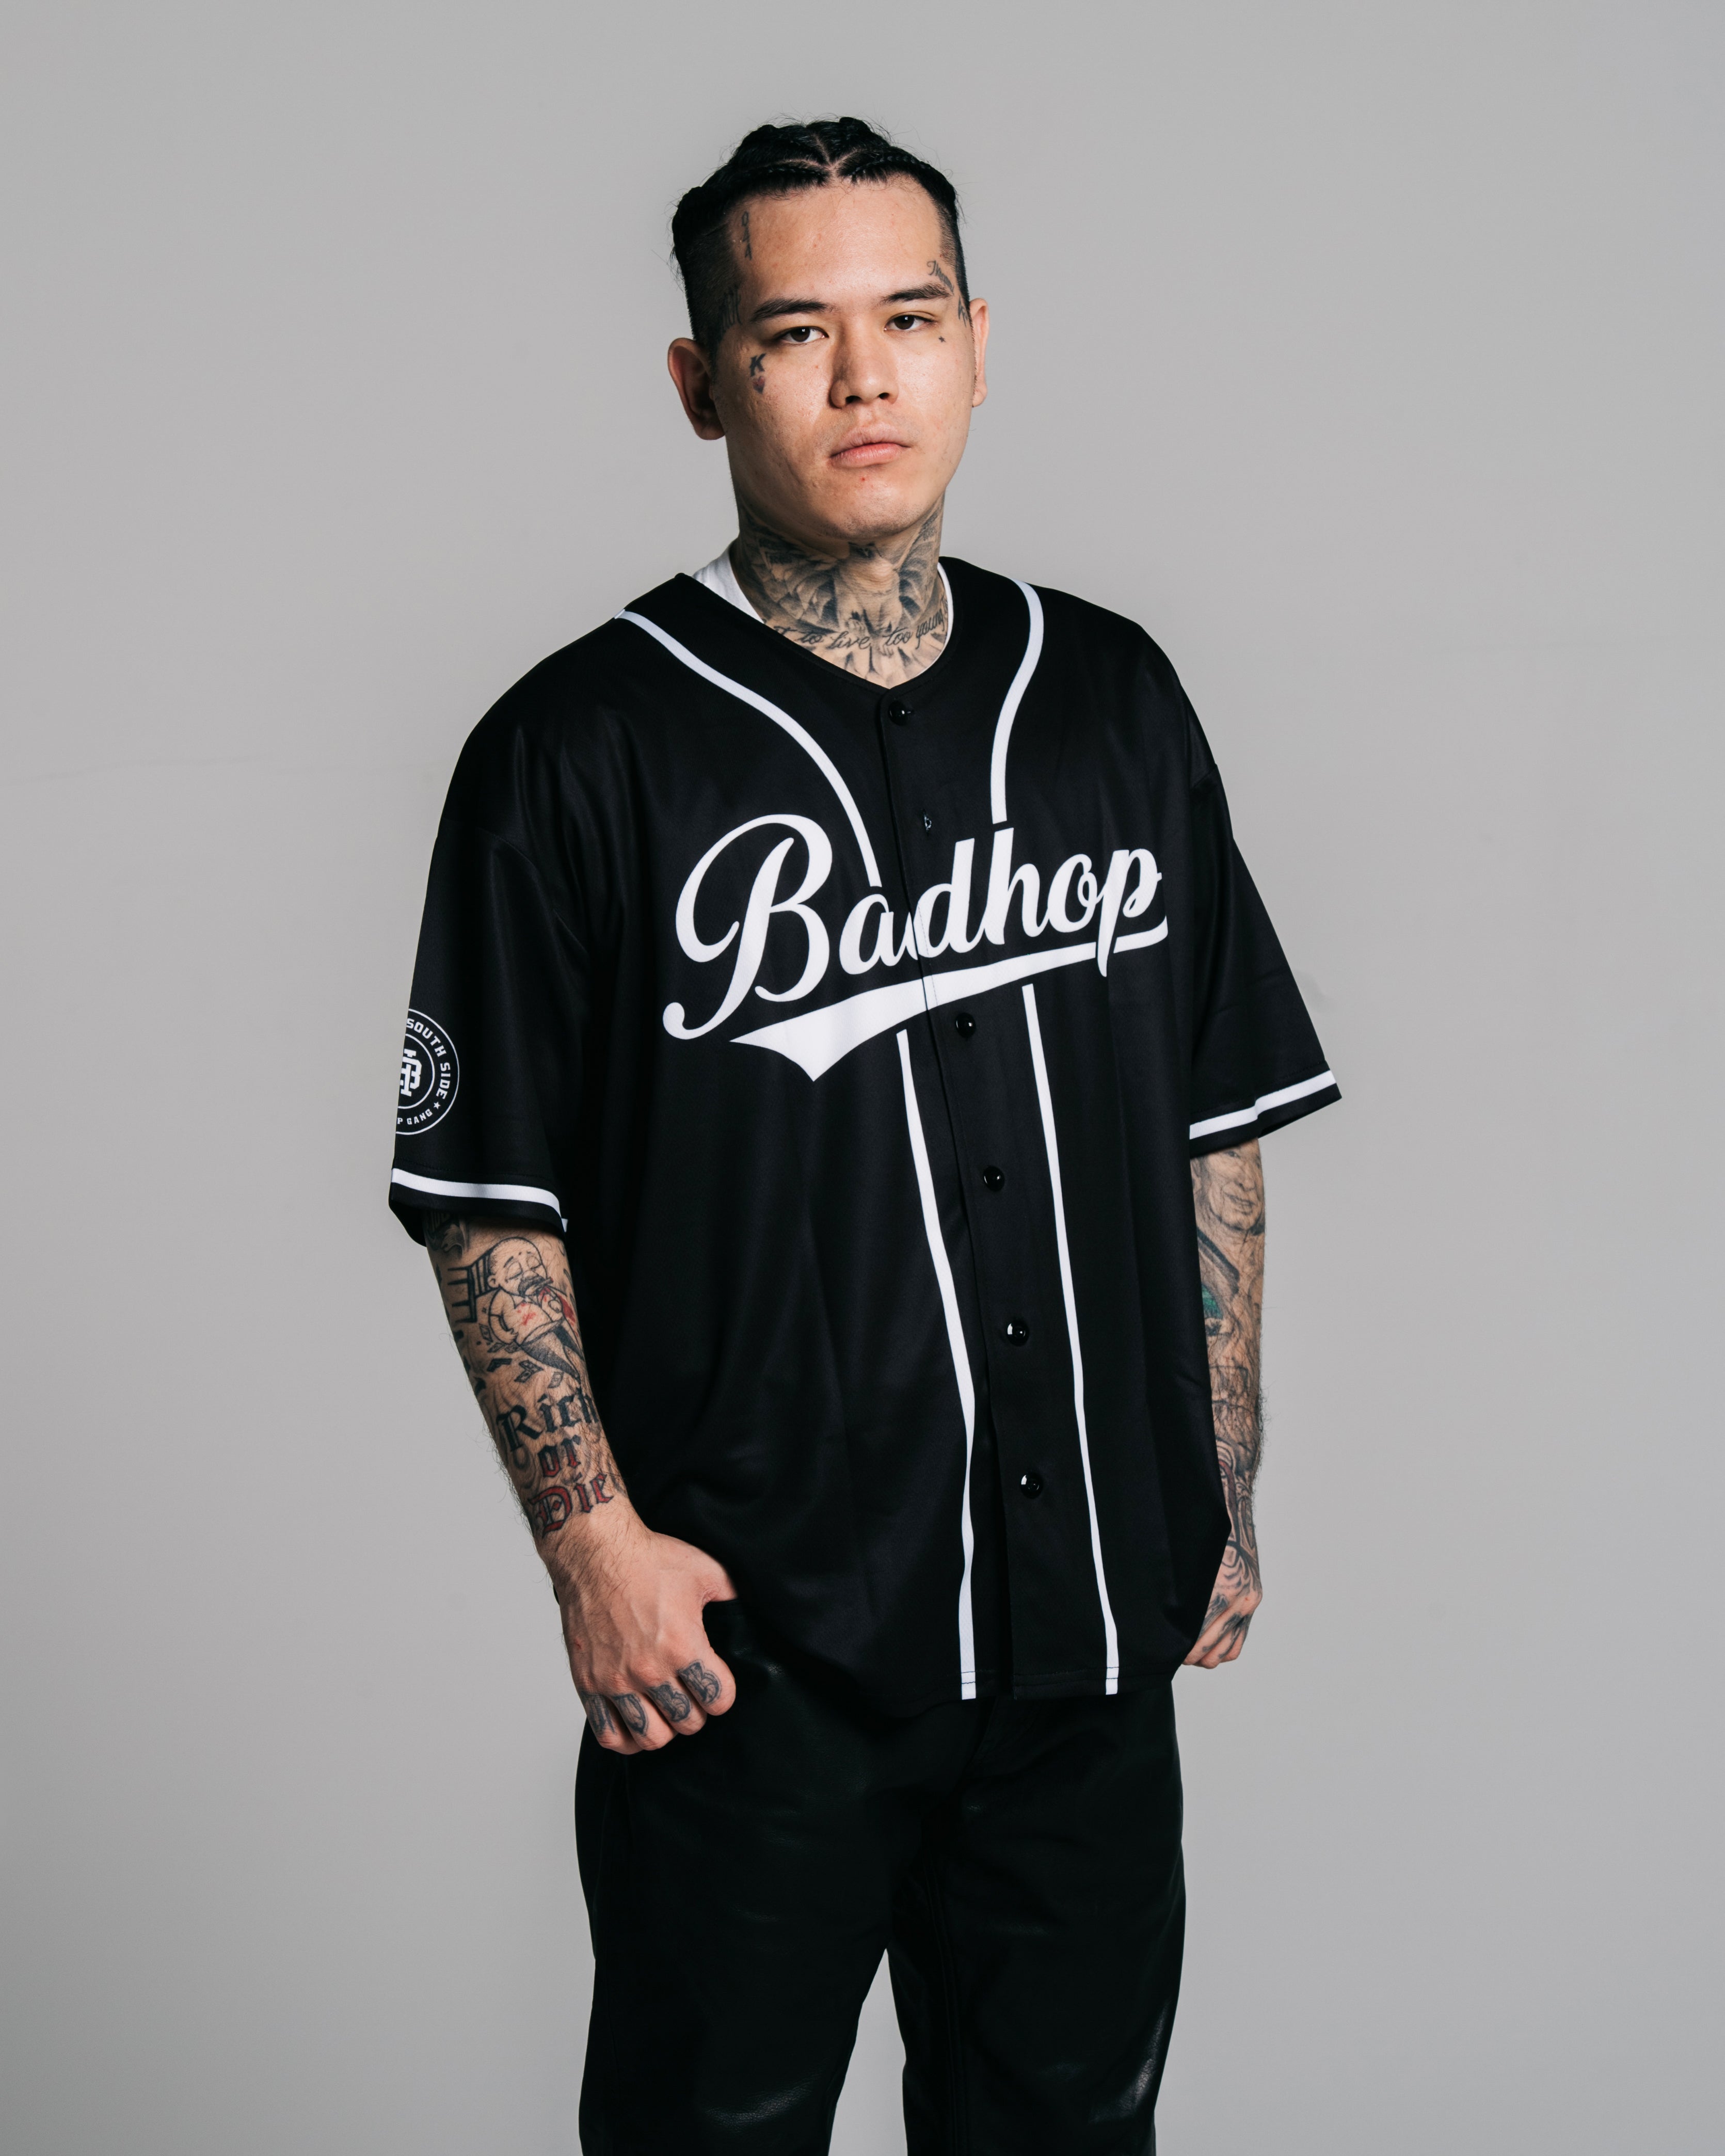 badhop BASEBALL SHIRT BLACK XLベースボールシャツ